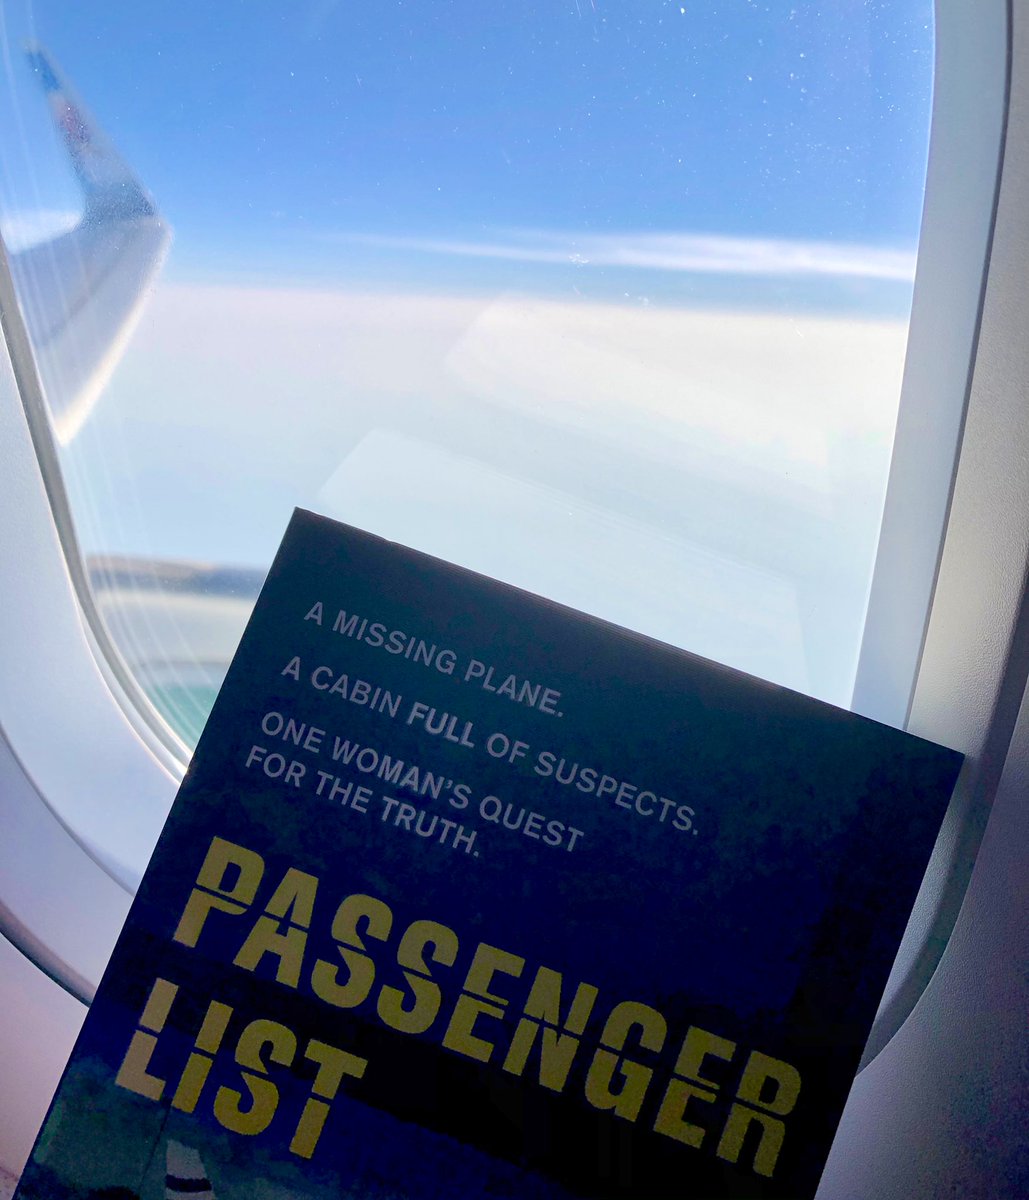 i started reading #passengerlist on my flight bc i love living on the edge ✈️